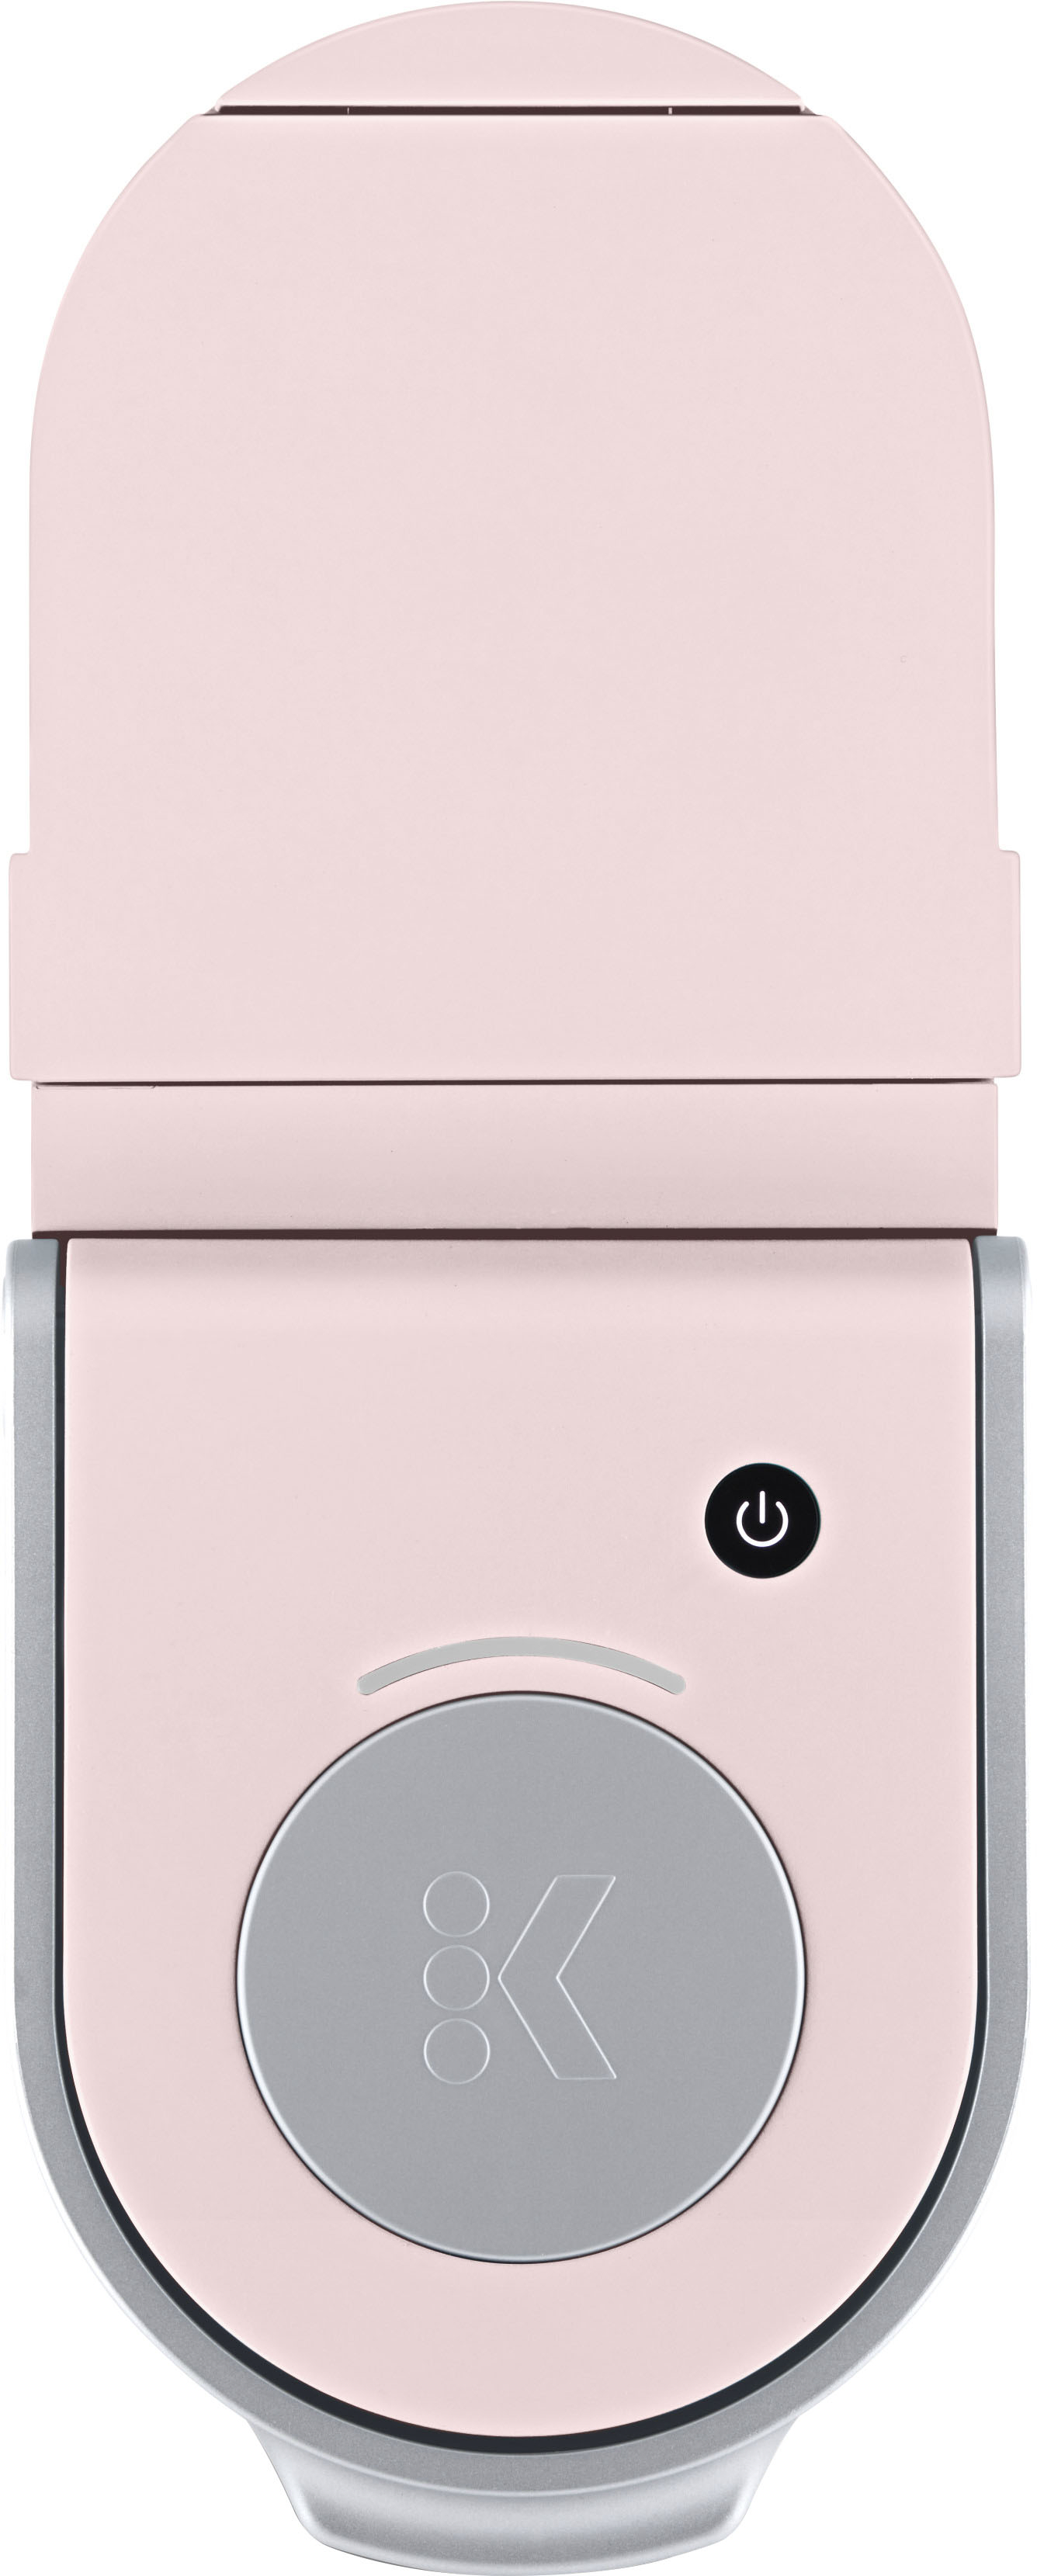 Pink K-Mini Keurig, Unboxing and Initial review